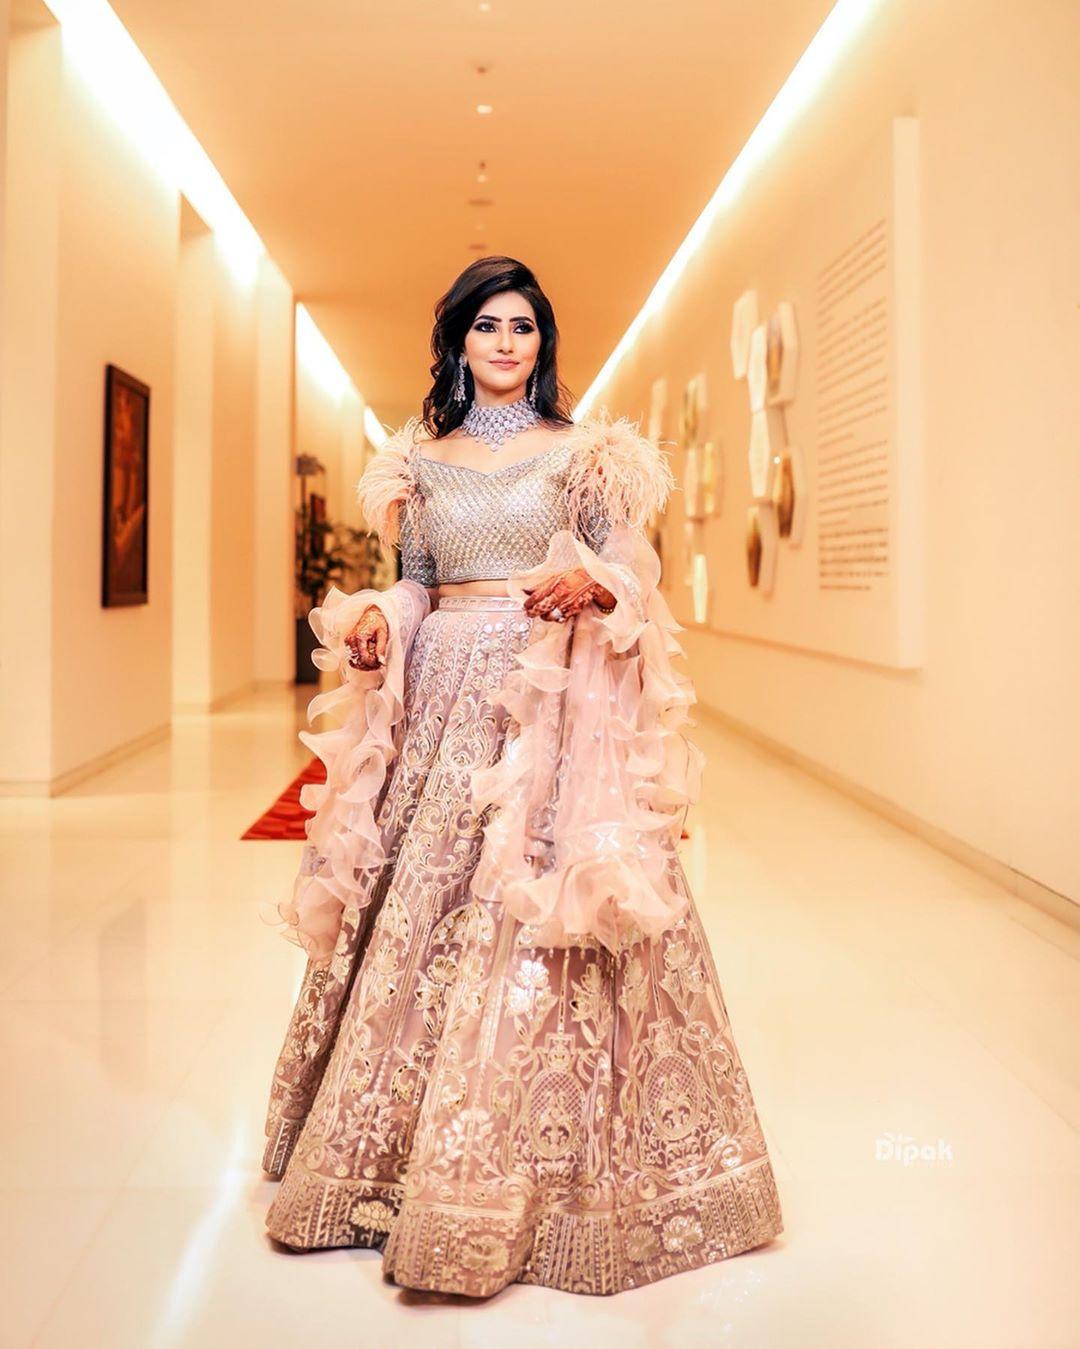 Kerala Engagement Dress | Stunning Bridal Outfits